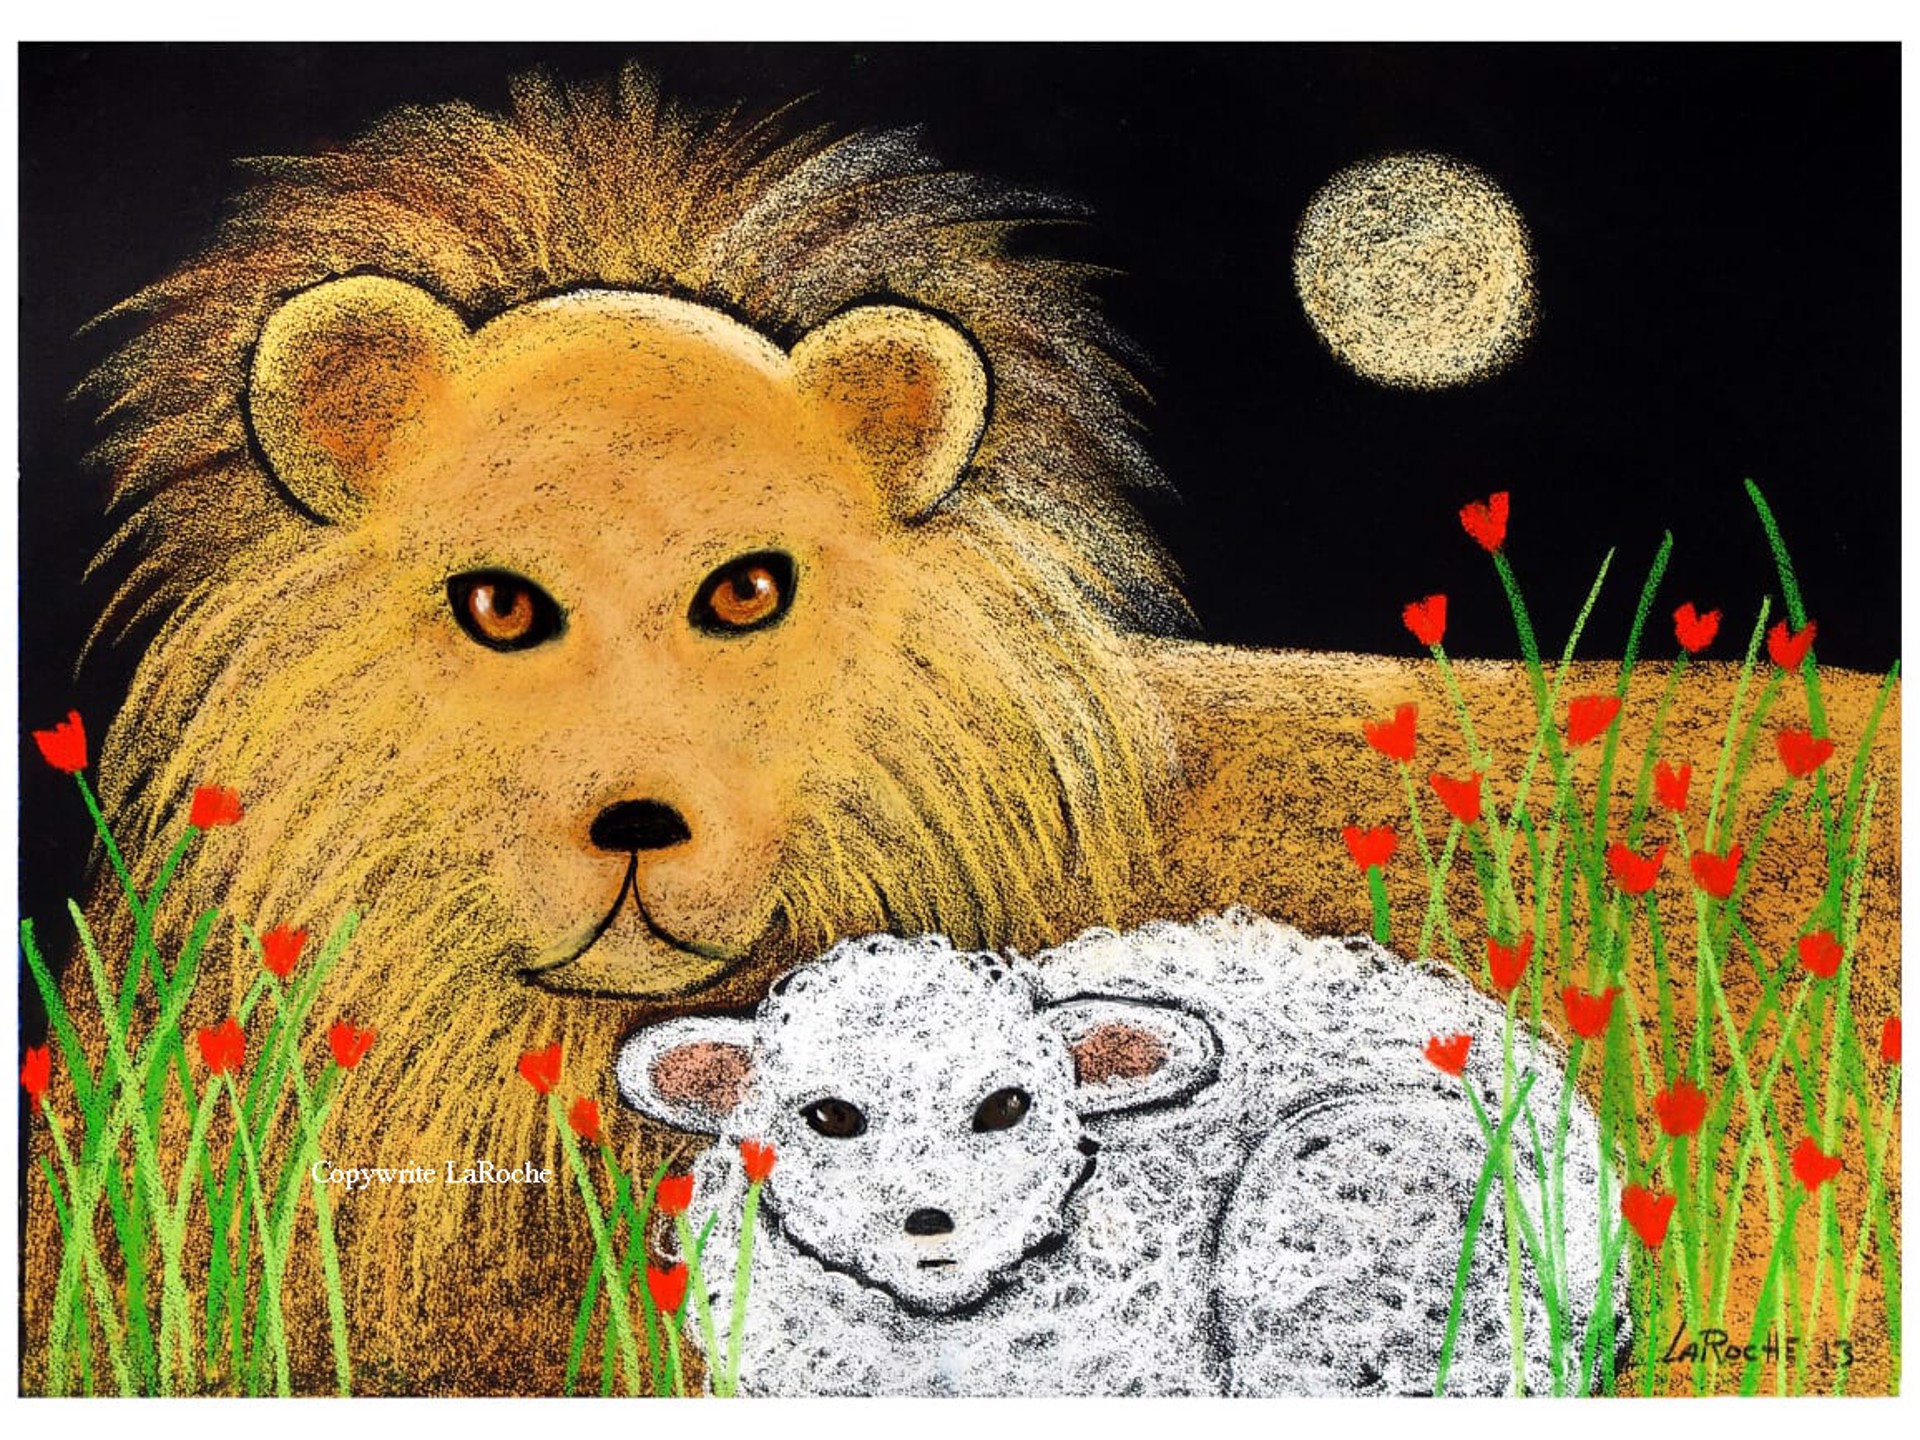 LION AND LAMB by Carole LaRoche